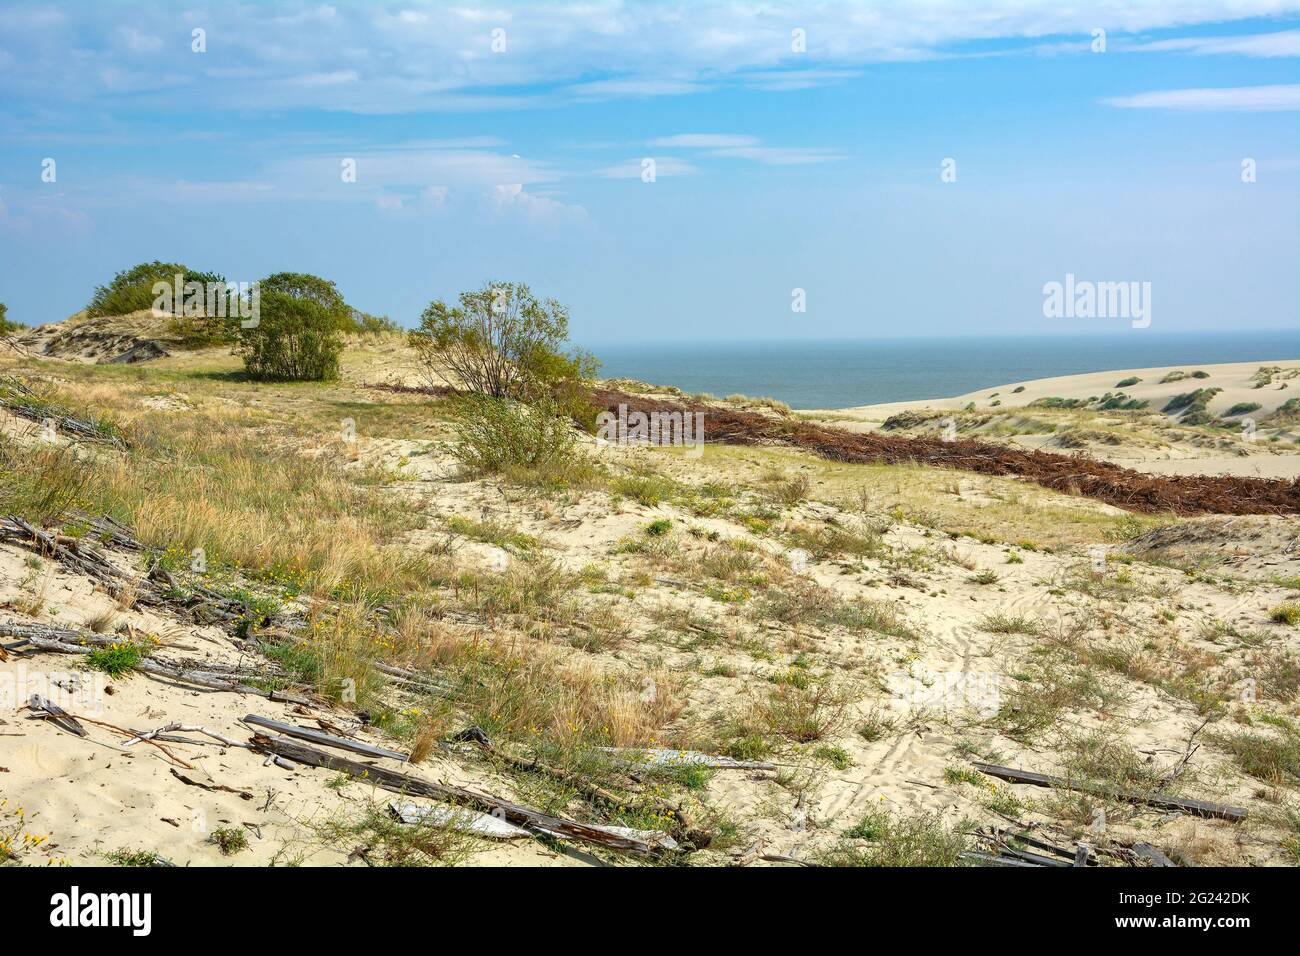 A distinctive landscape of sand dunes on the Curonian spit, the Kaliningrad region Stock Photo